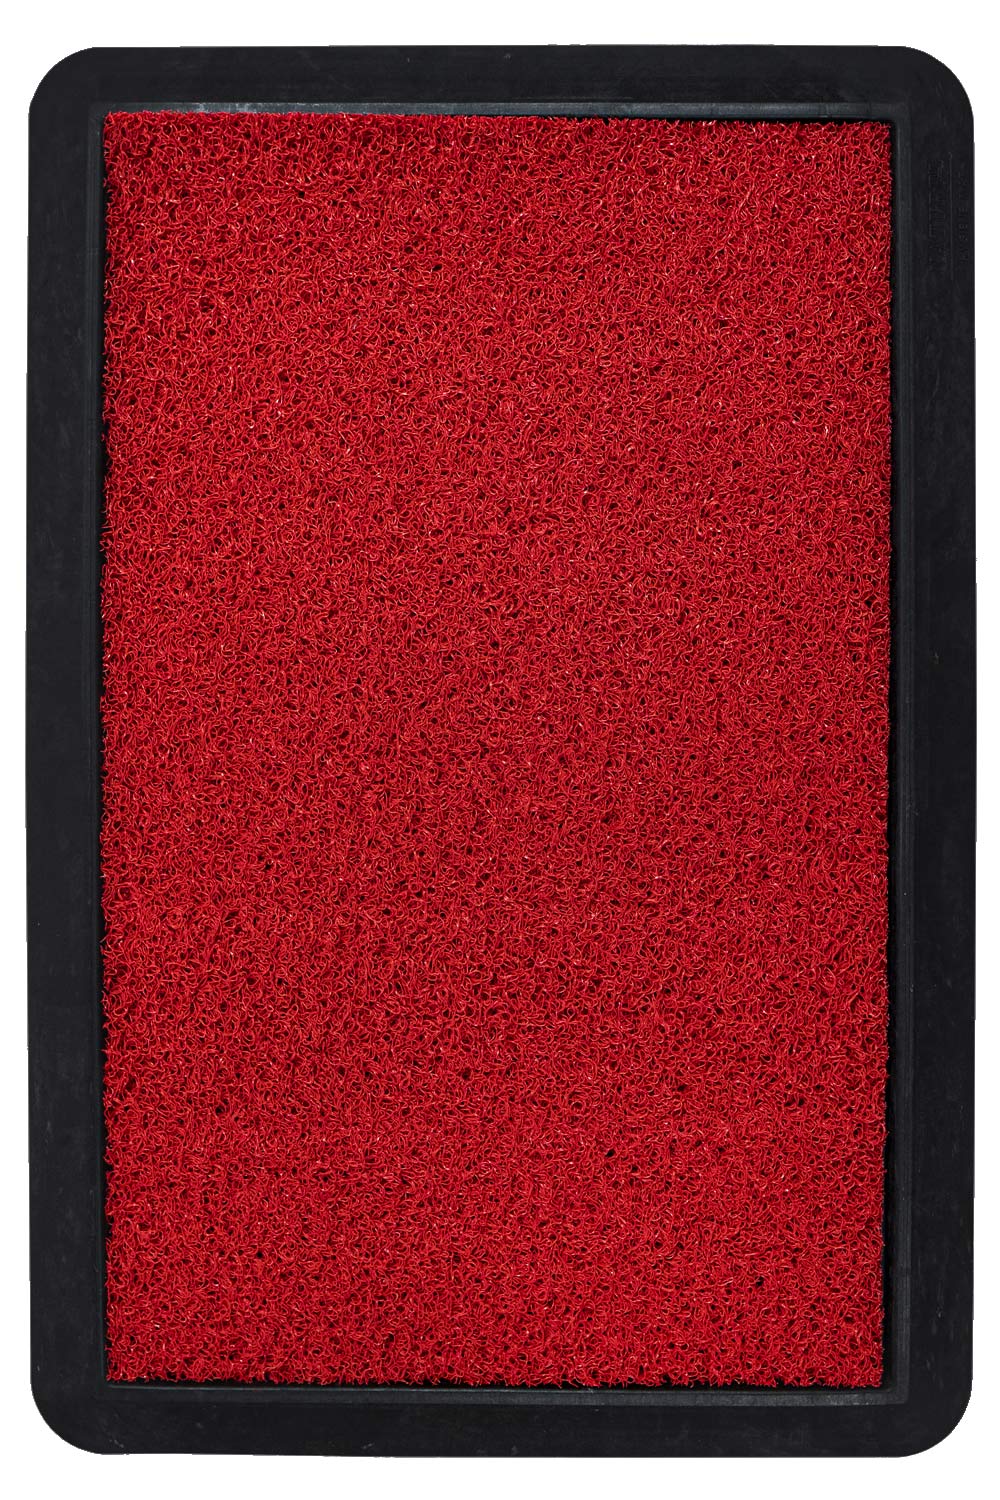 Rohož Disinfectant - červená 45x70 cm